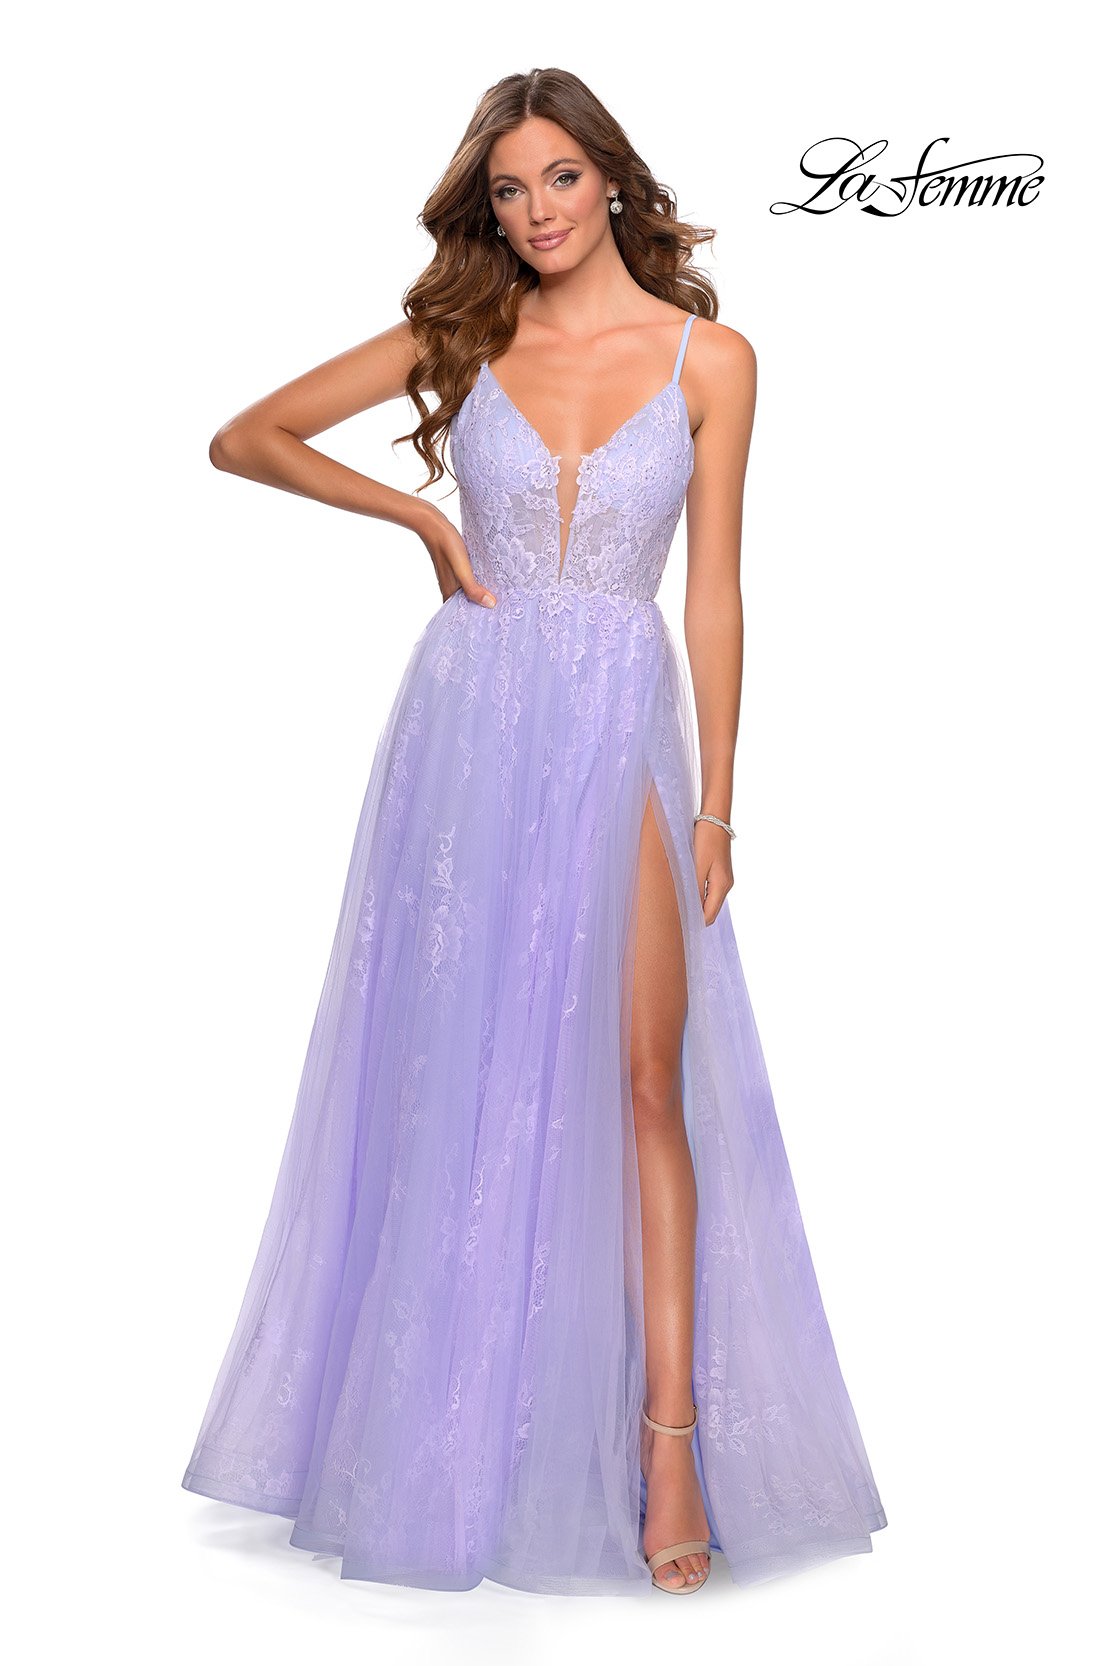 La Femme 28387 dress images in these colors: Lavender.